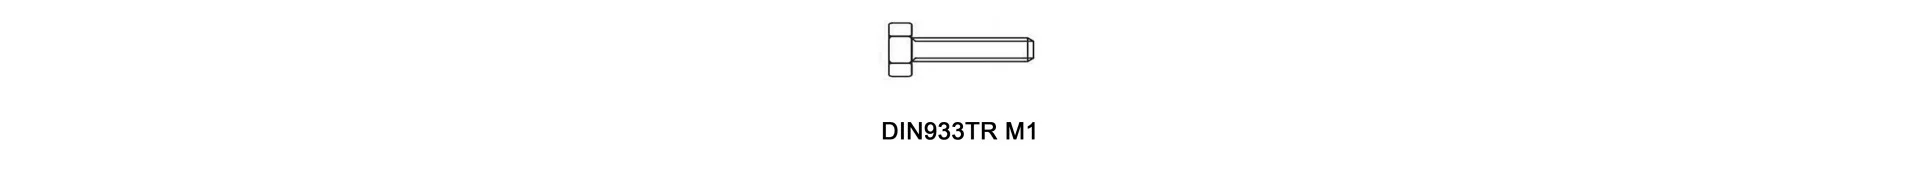 DIN933TR M1